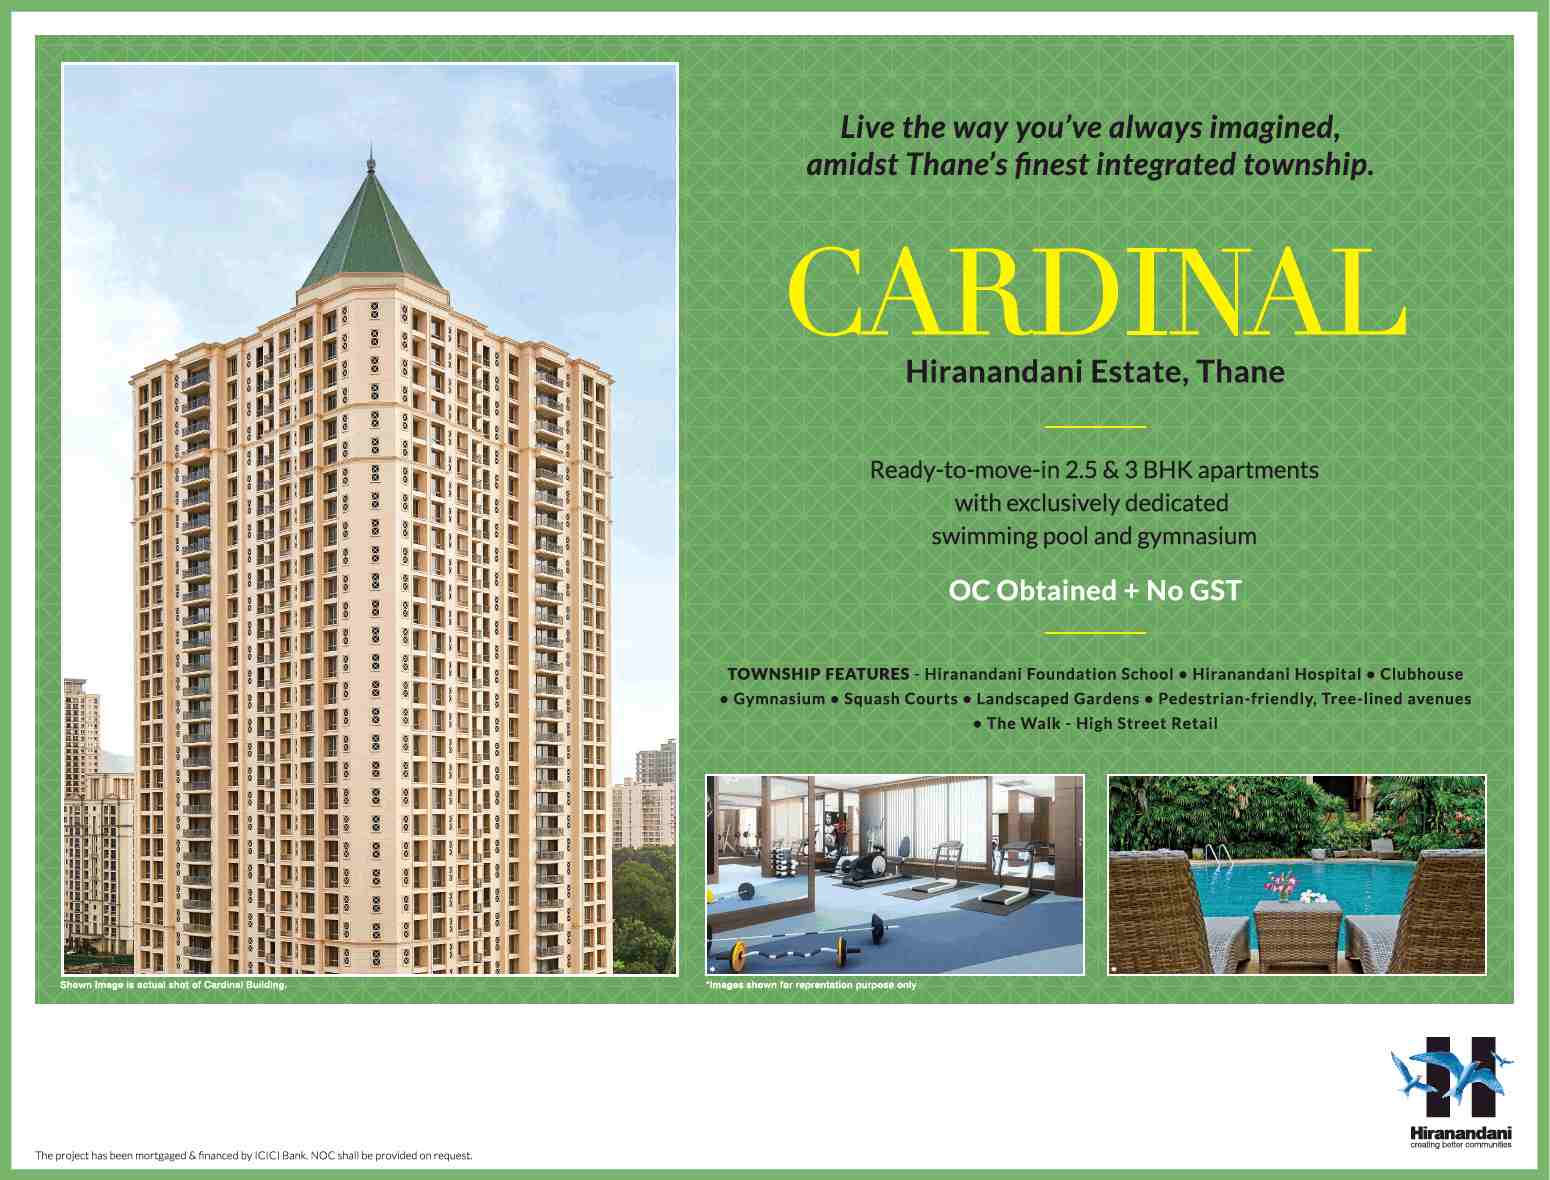 Live amidst Thane's finest integrated township at Hiranandani Estate Cardinal in Mumbai